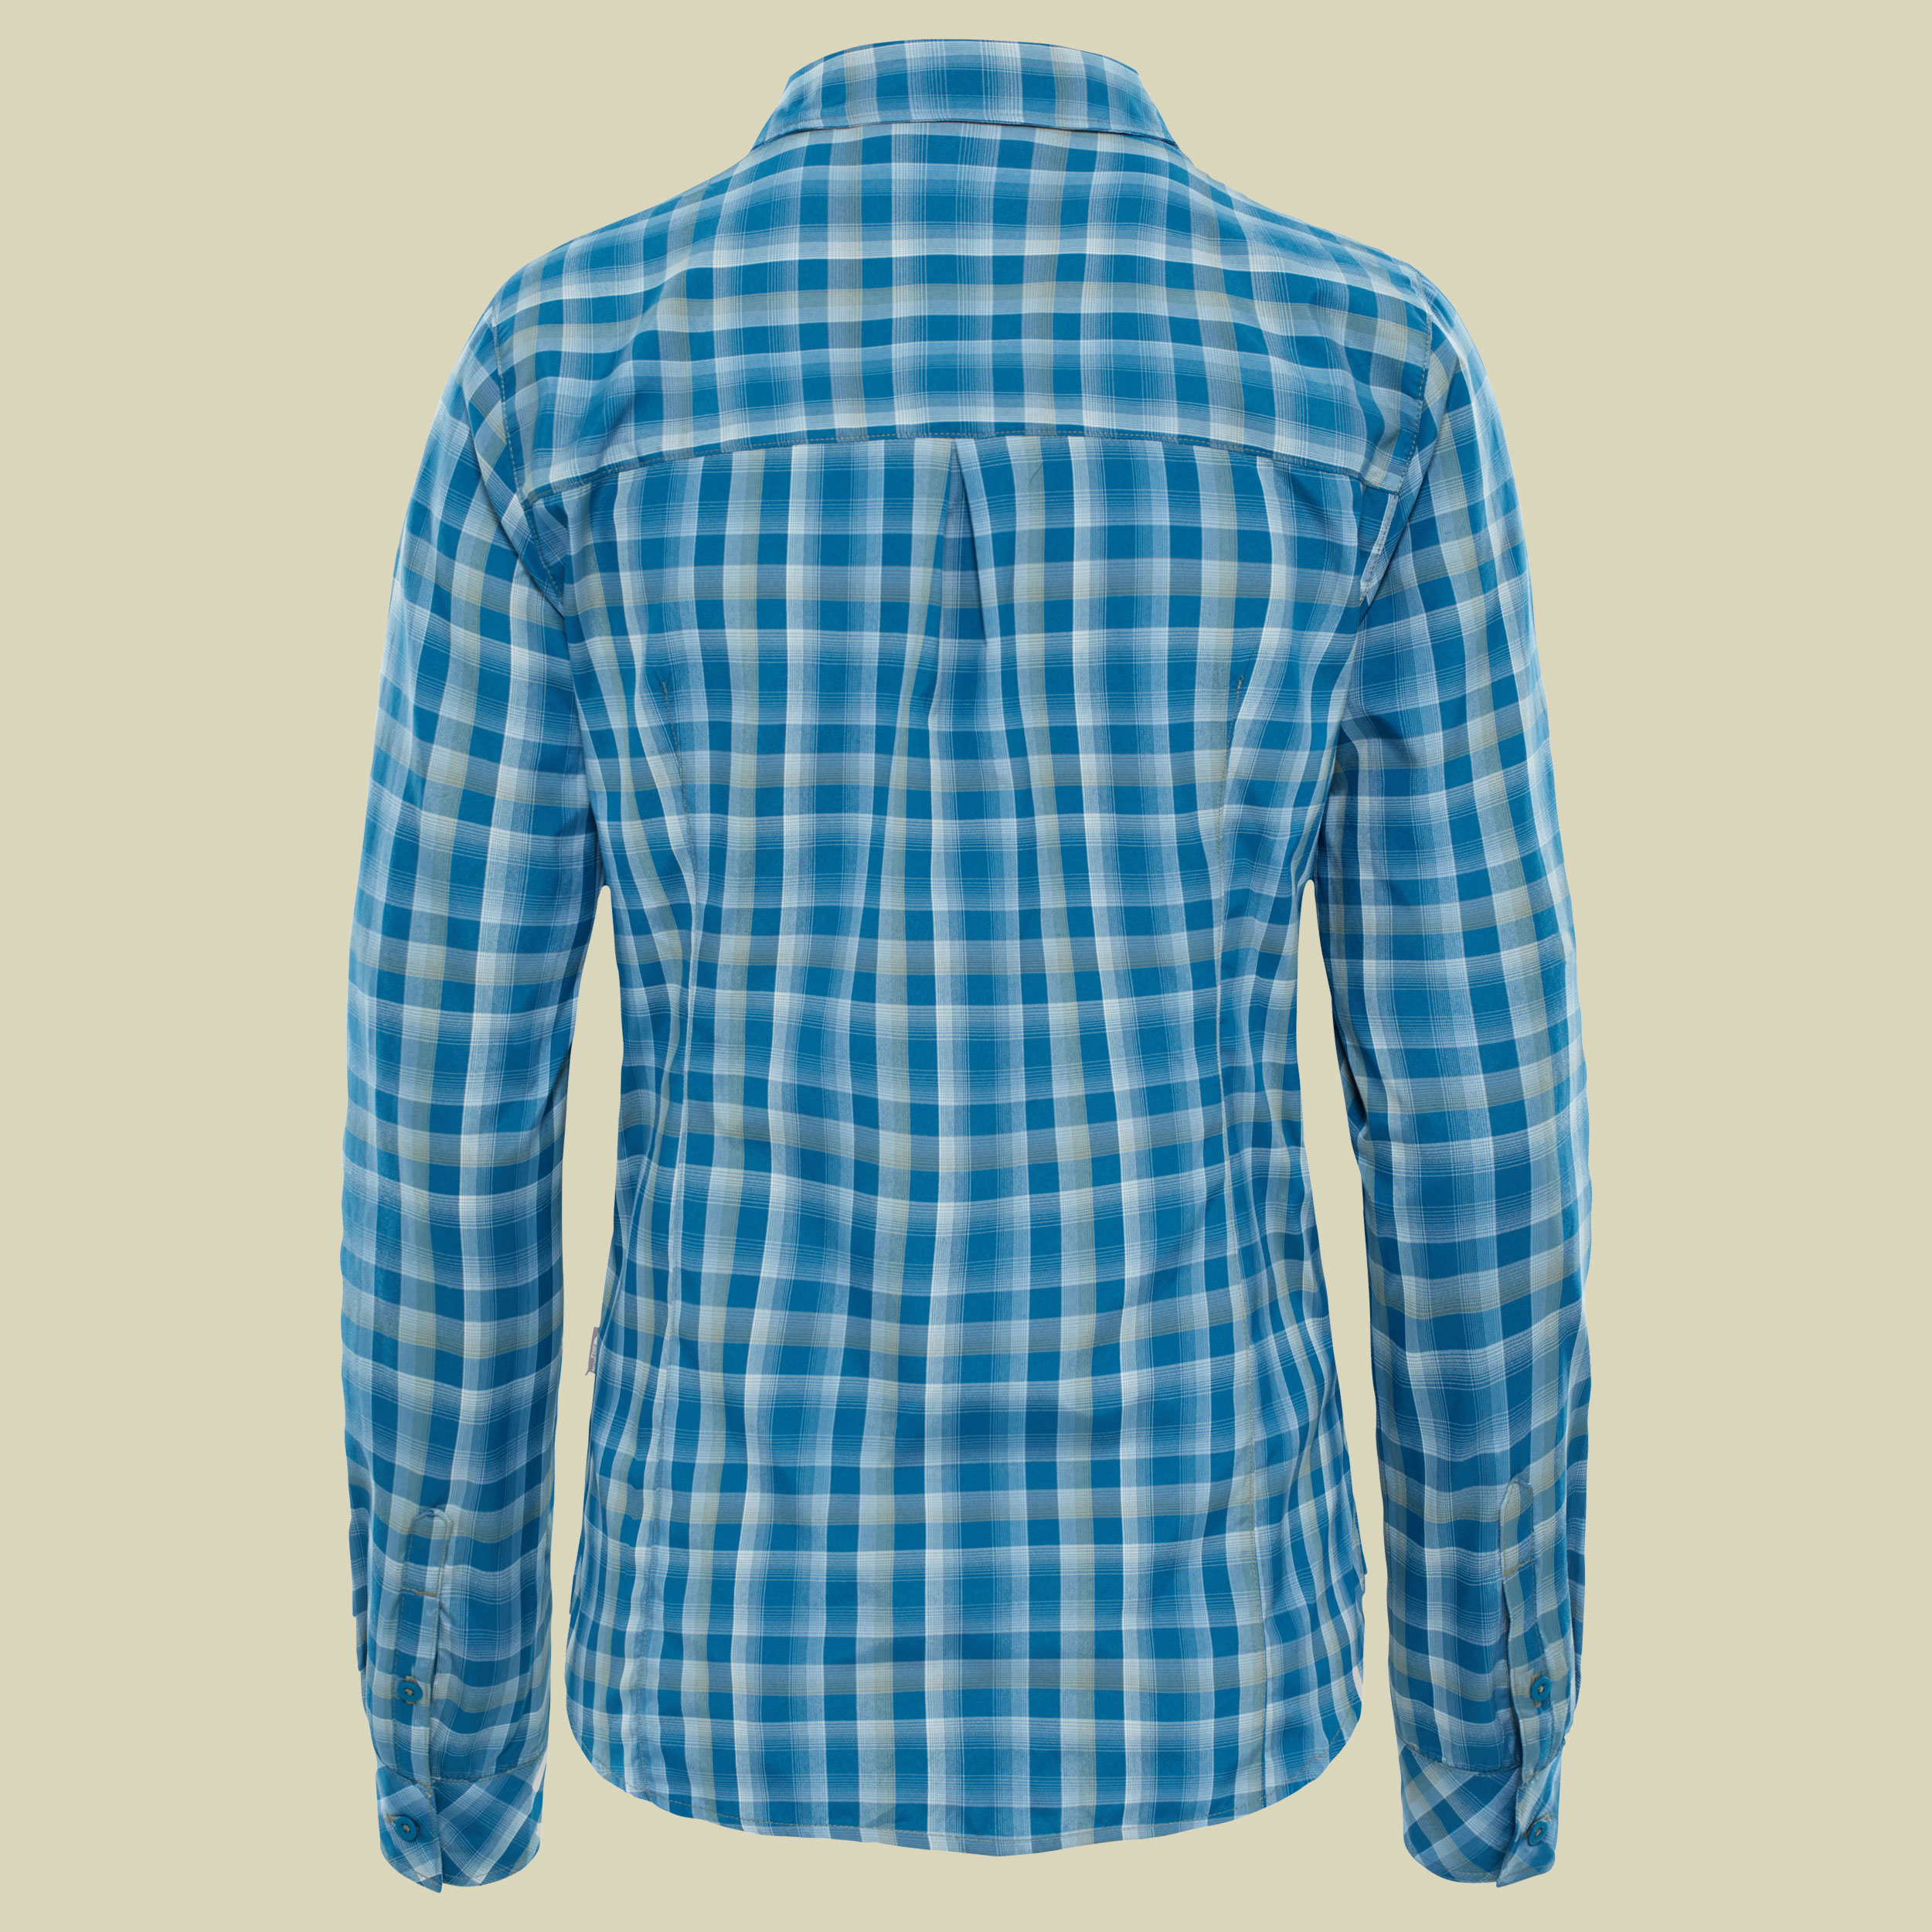 L/S Zion Shirt Women Größe XS Farbe blue coral plaid